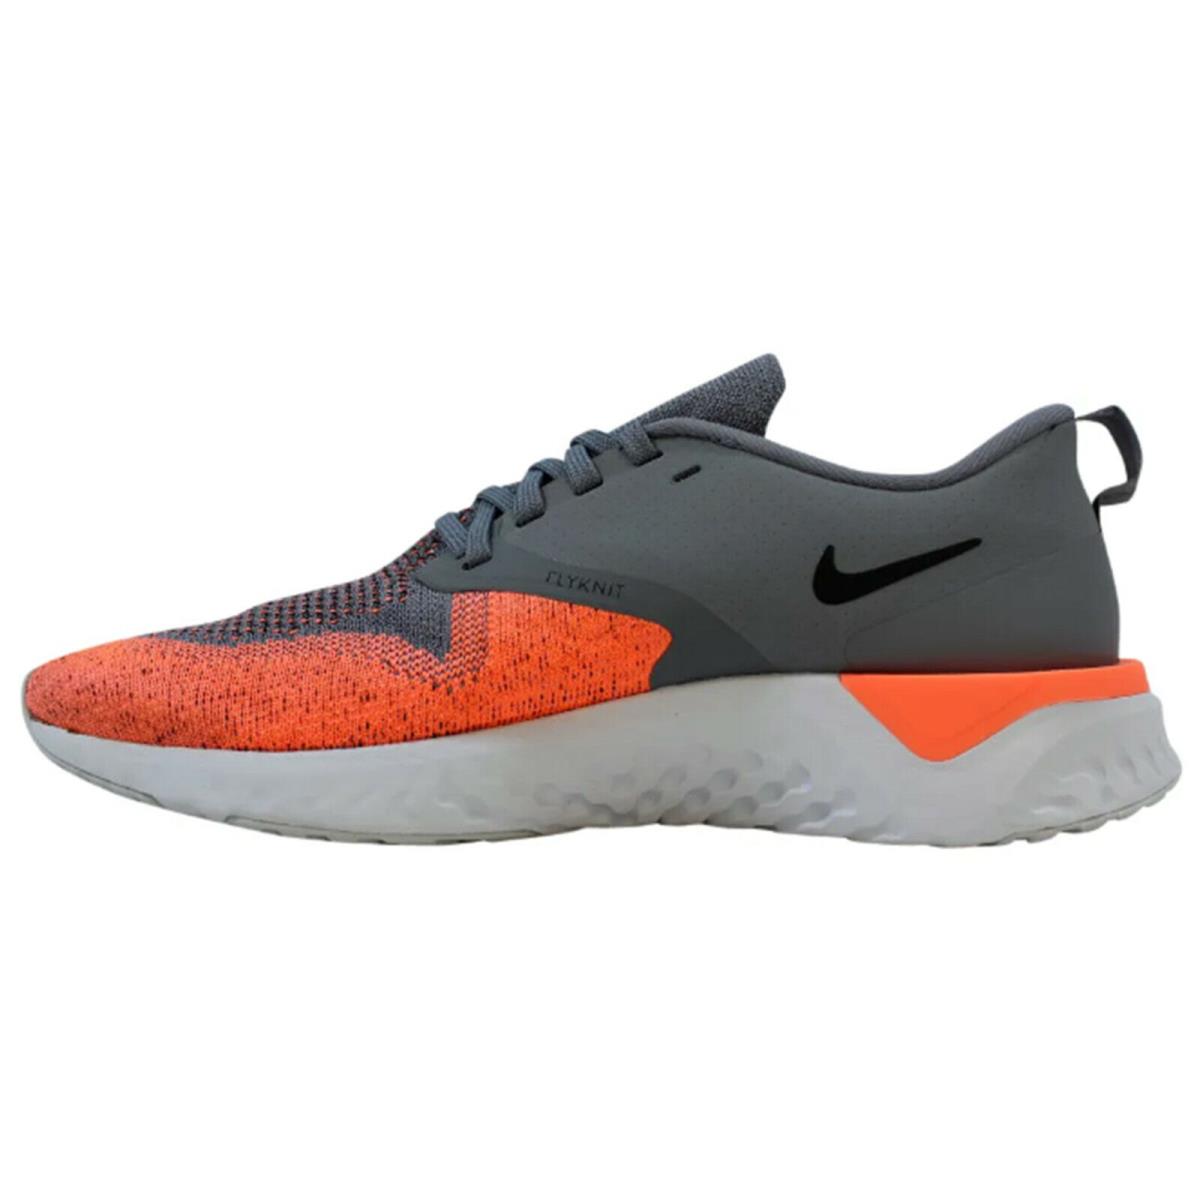 Nike shoes Odyssey React Flyknit - COOL GREY / BLACK-BRIGHT MANGO 1